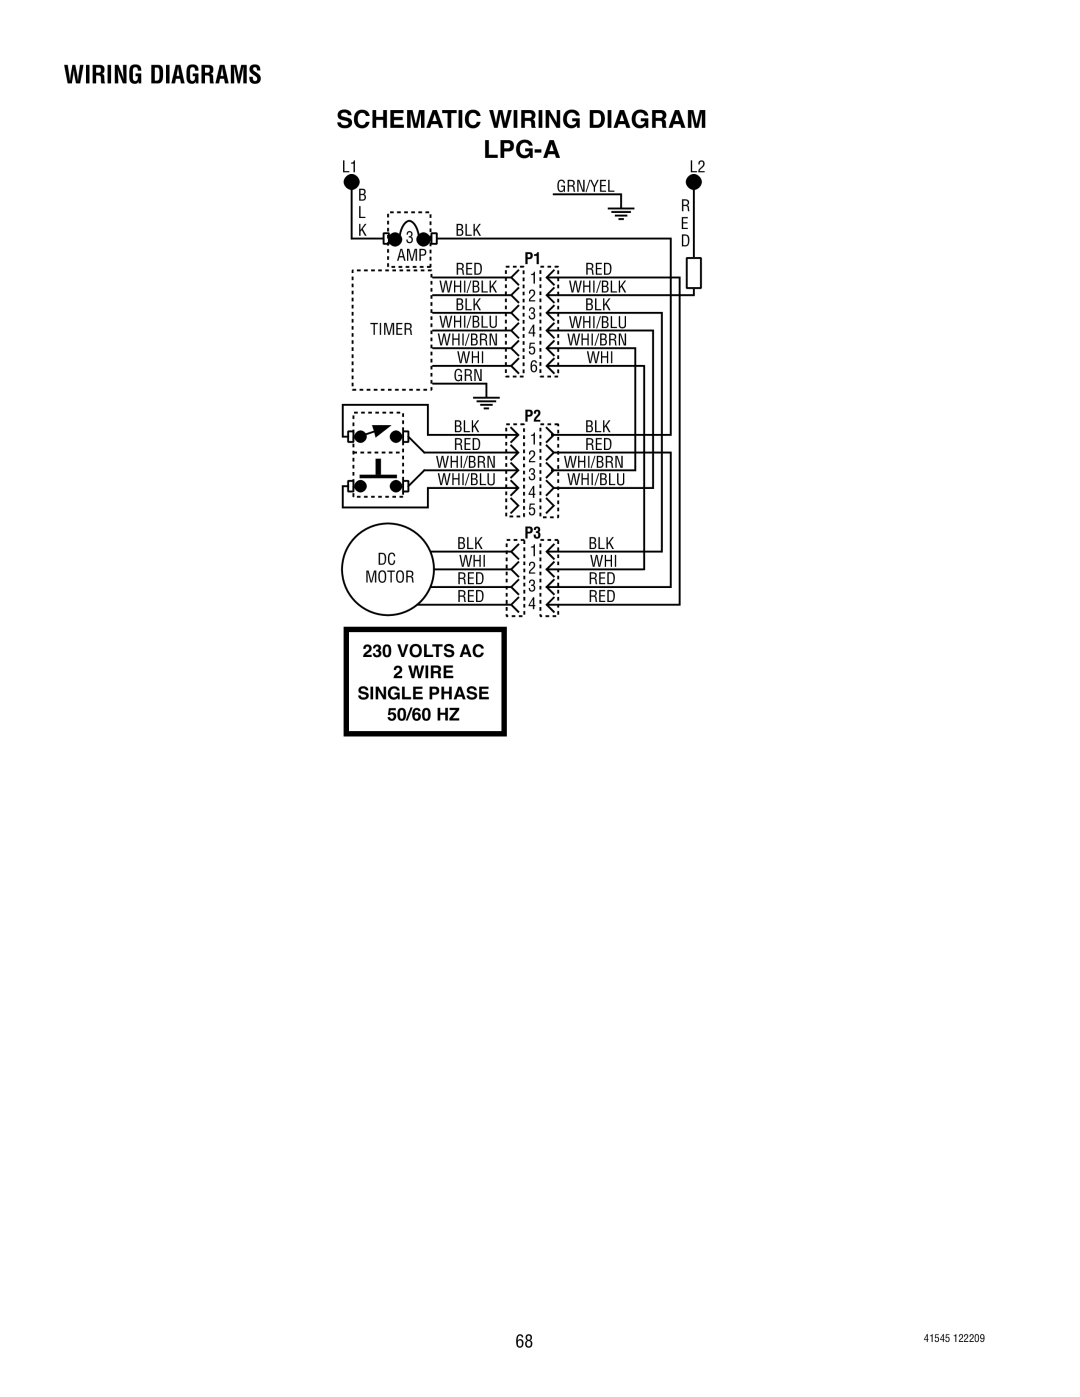 Bunn G9-2T DBC, LPG-2, G9WD, FPG-2 Lpg-A, Wiring Diagrams, Schematic Wiring Diagram, VOLTS AC 2 WIRE SINGLE PHASE 50/60 HZ 